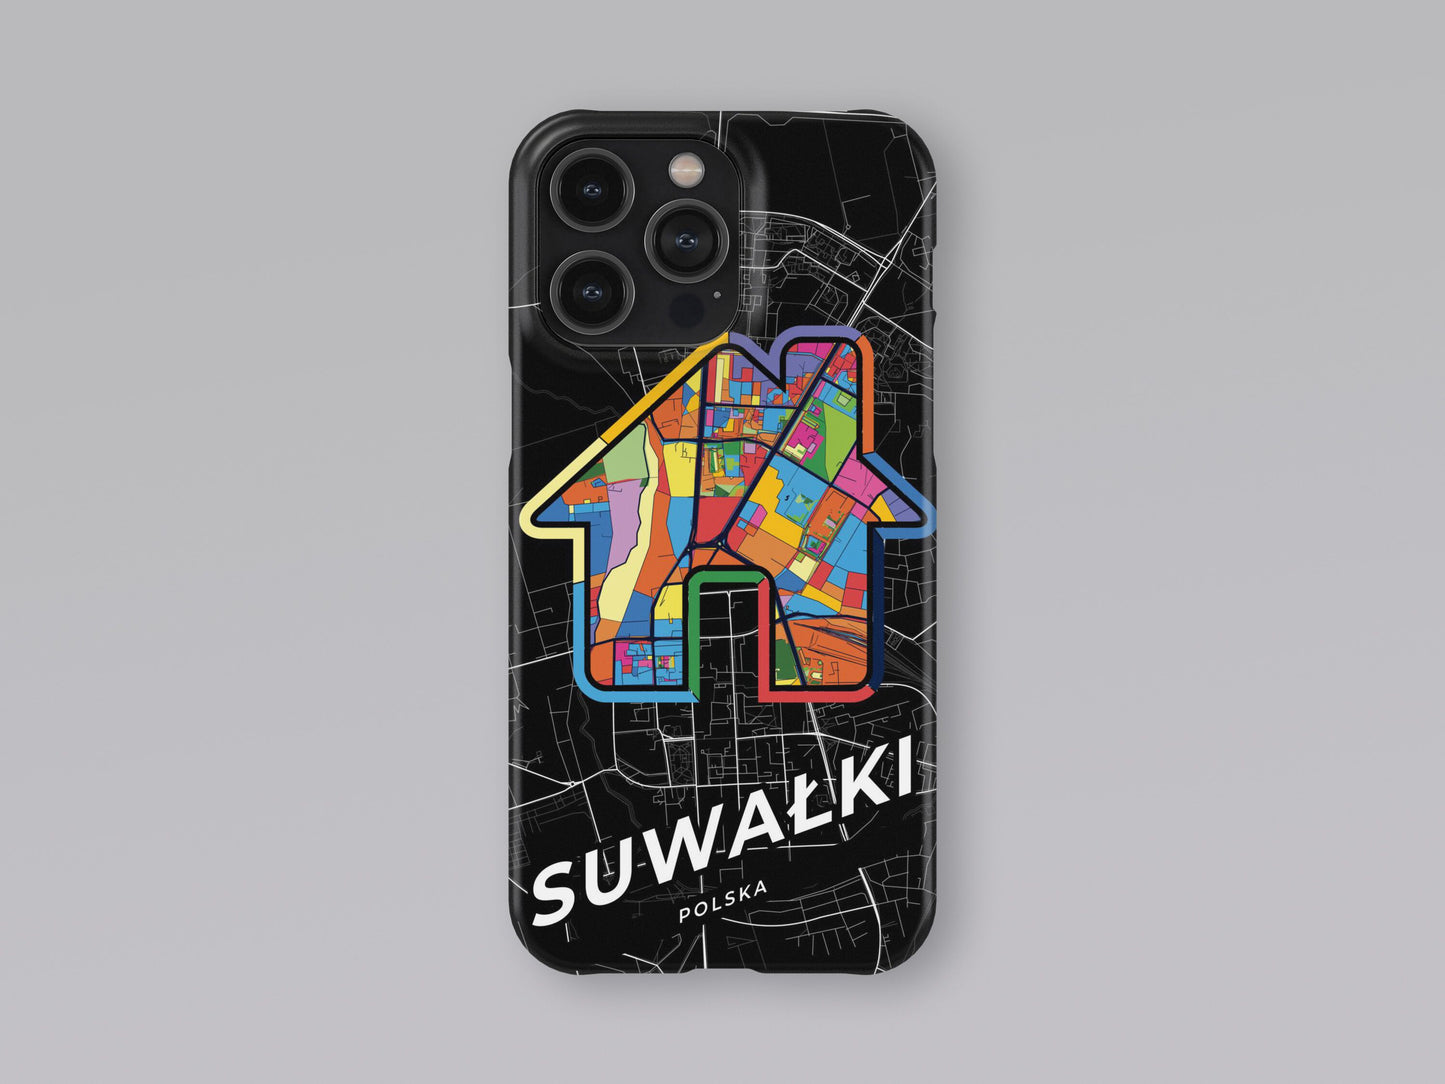 Suwałki Poland slim phone case with colorful icon 3